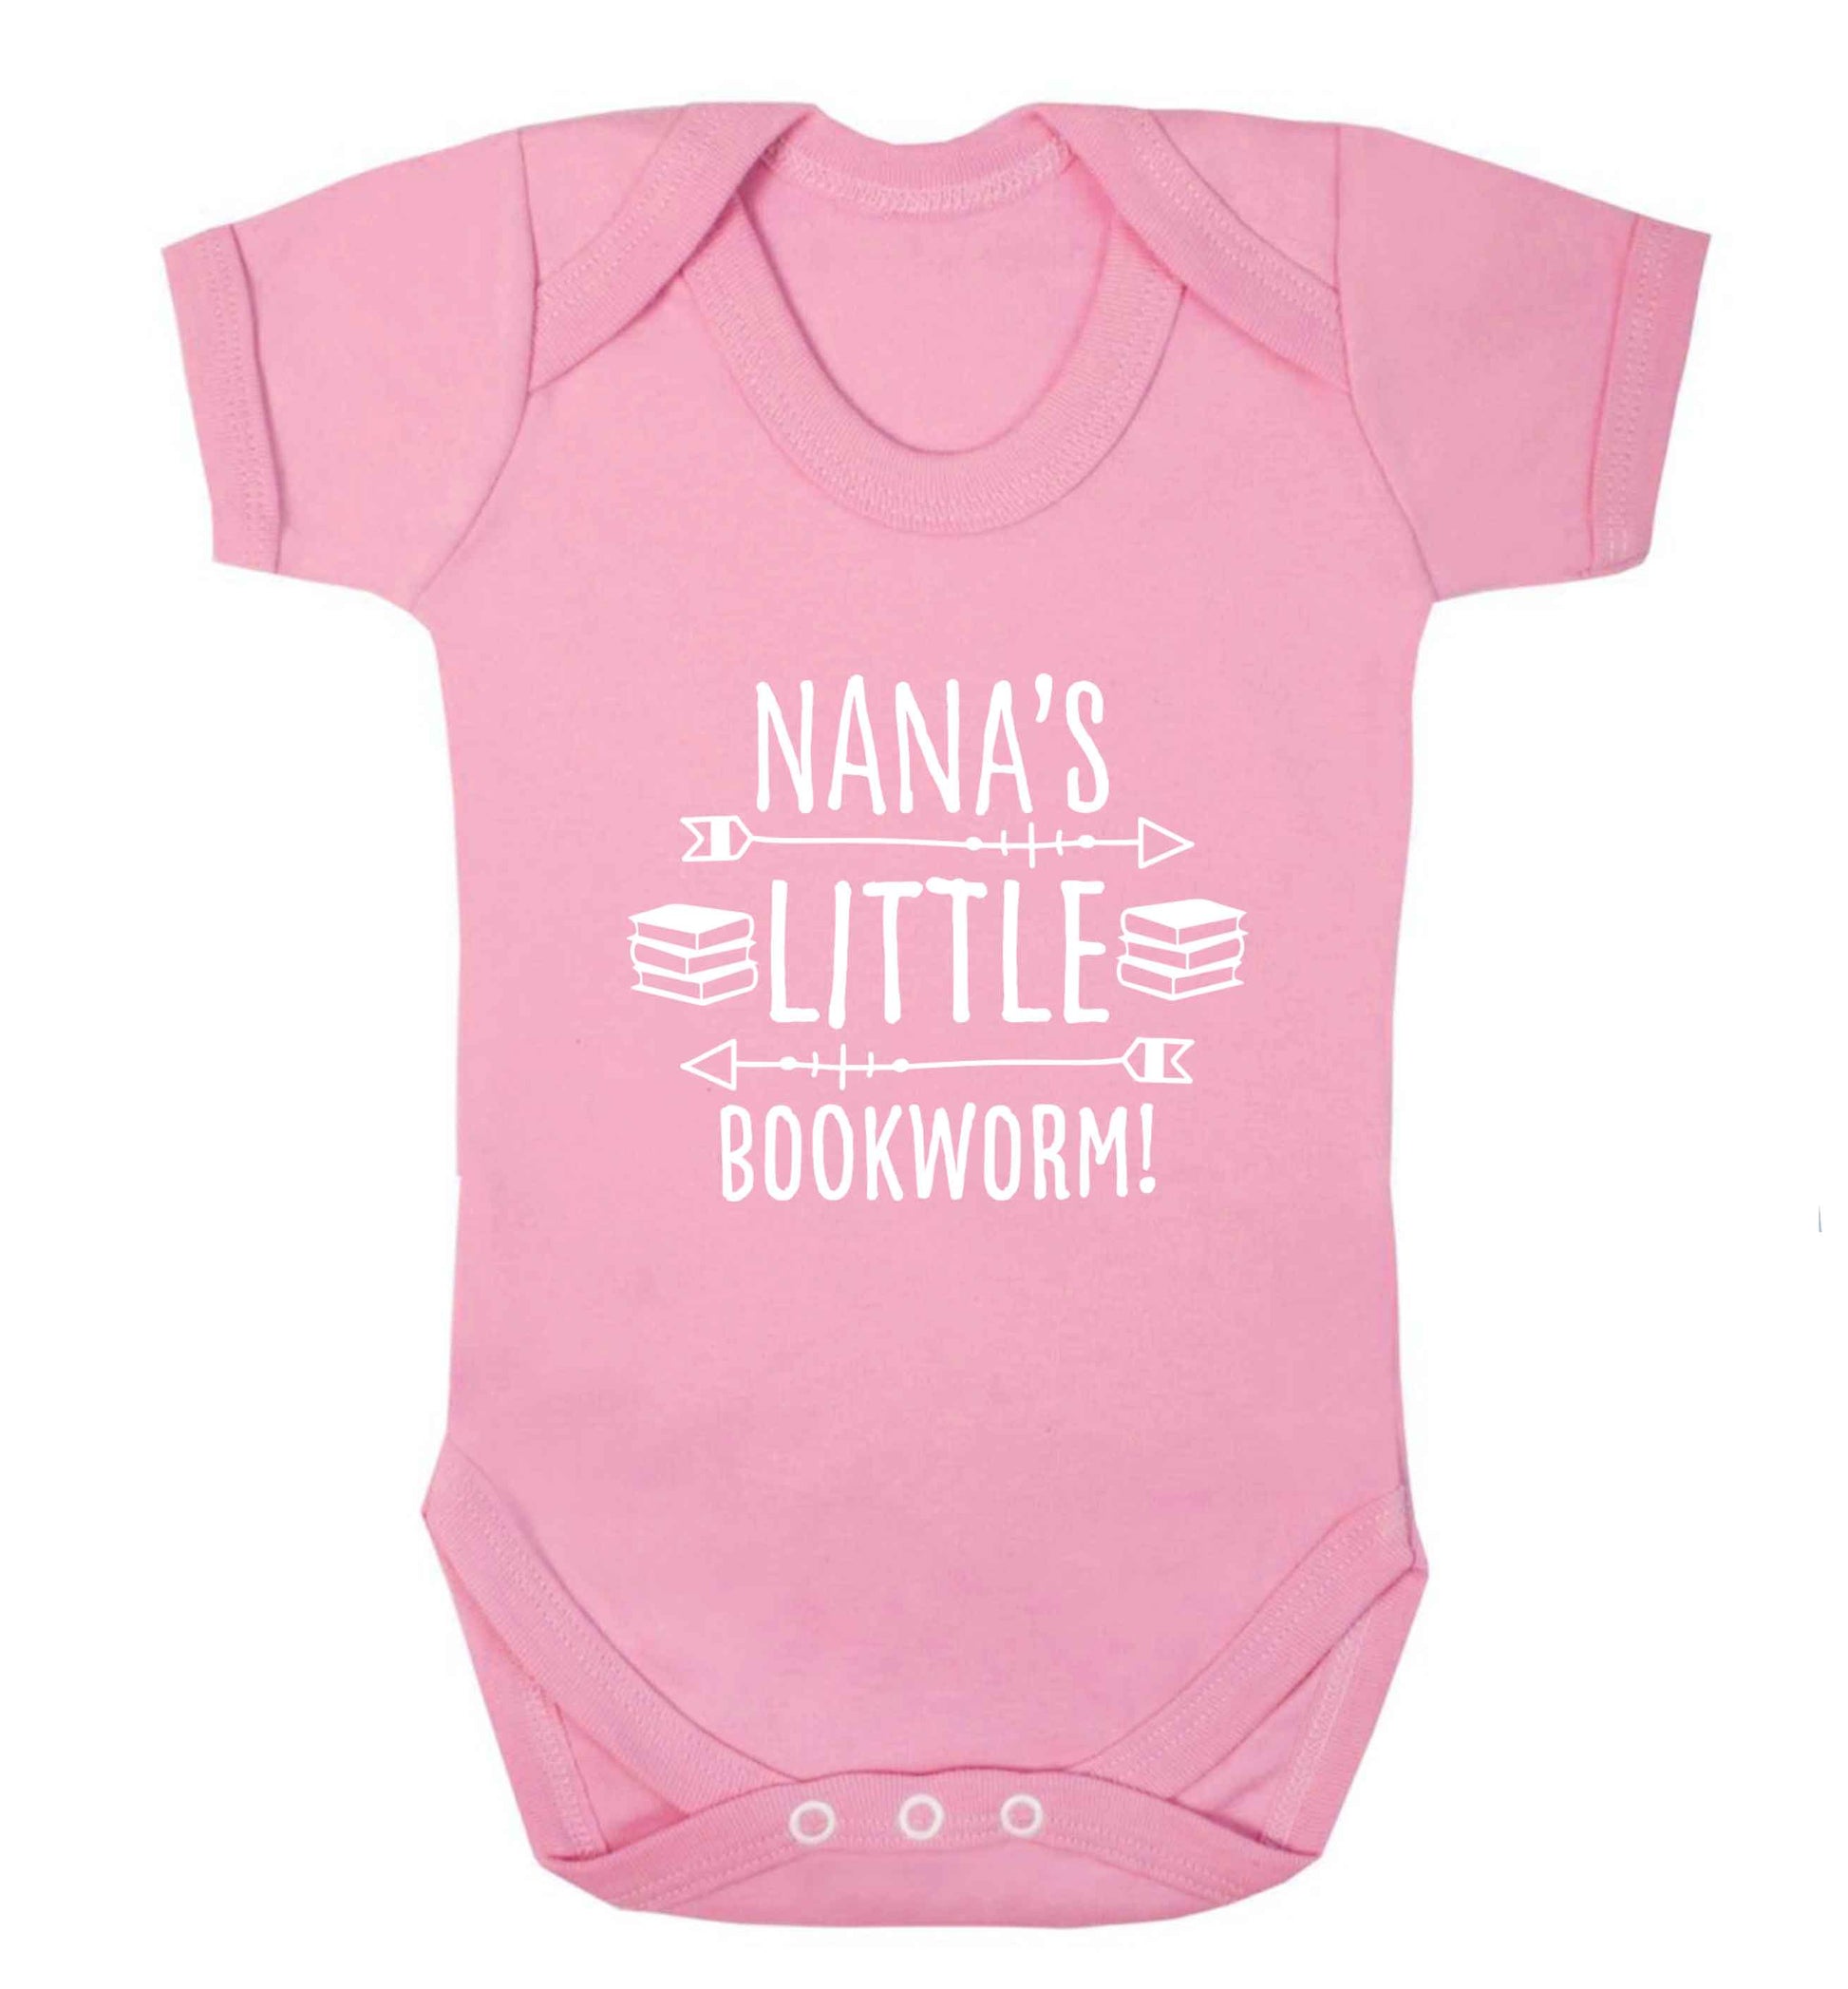 Nana's little bookworm baby vest pale pink 18-24 months